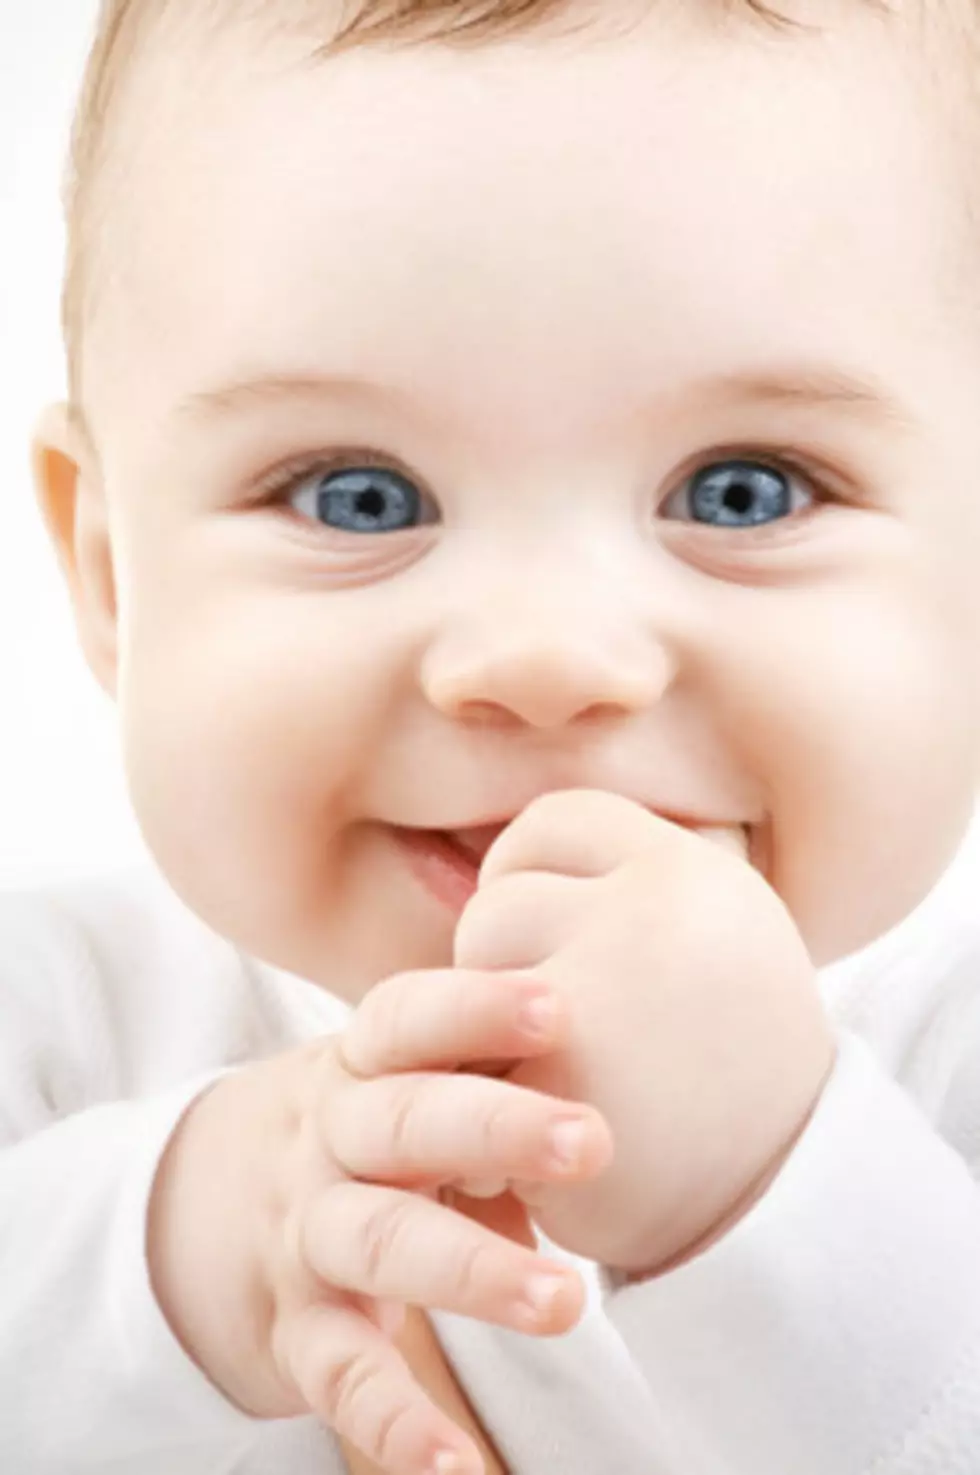 Creepy Baby Laughs Like an Evil Genius [Video]